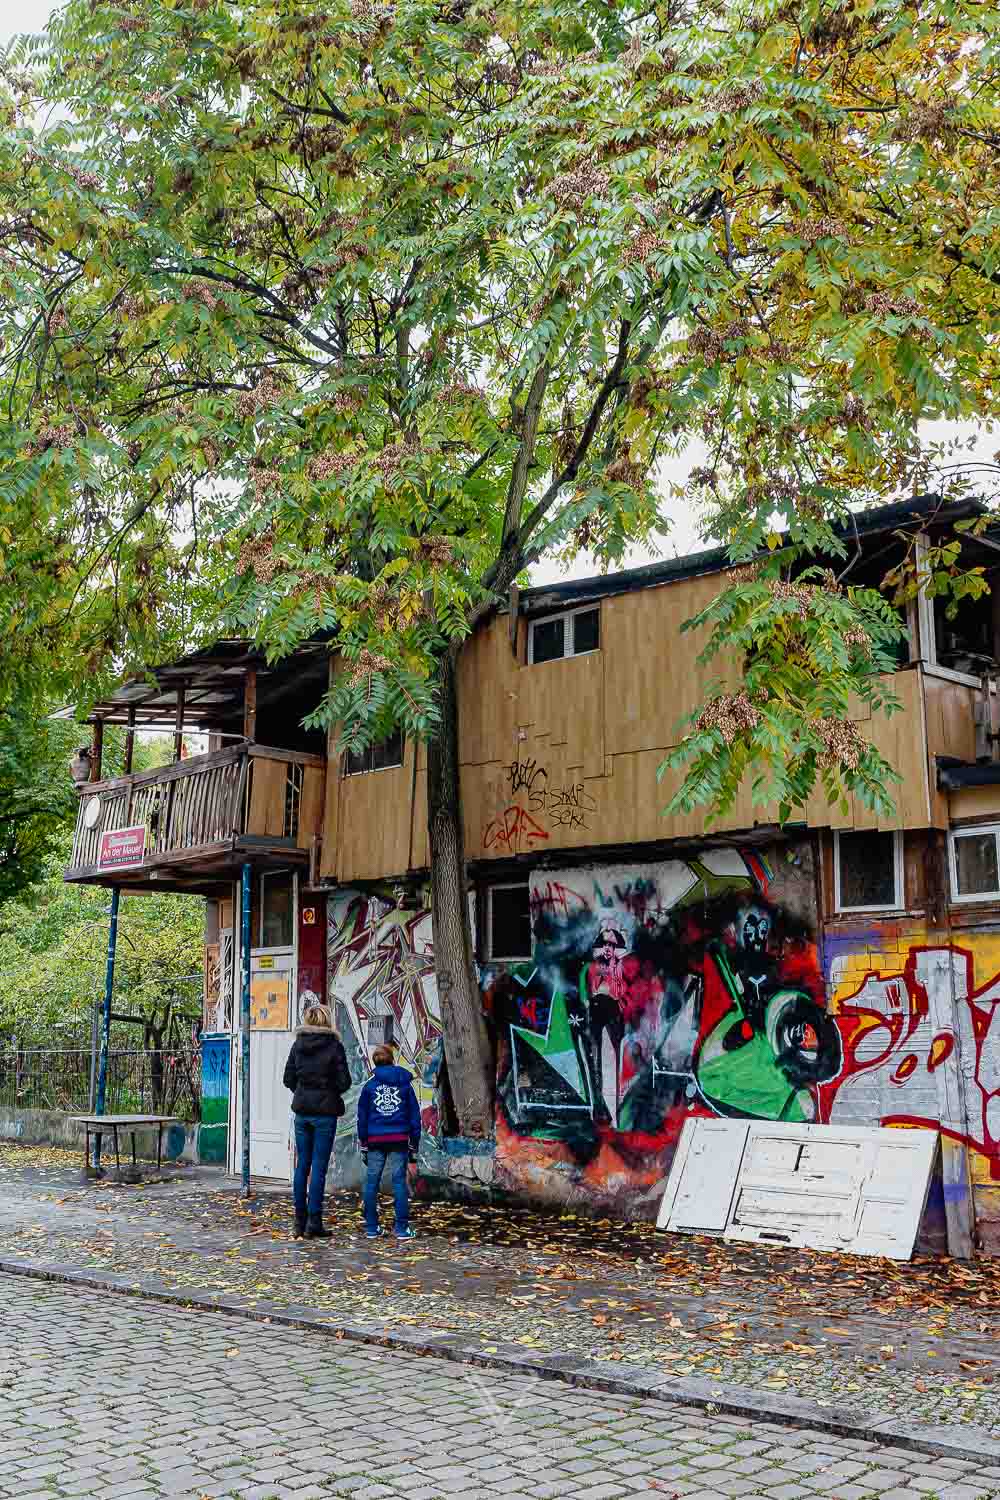 Berlin Graffiti Tour - Sights Alternative Berlin Tours - Berlin Grafitti Tour - the other side of Berlin - city tour - Berlin sights in the backyards